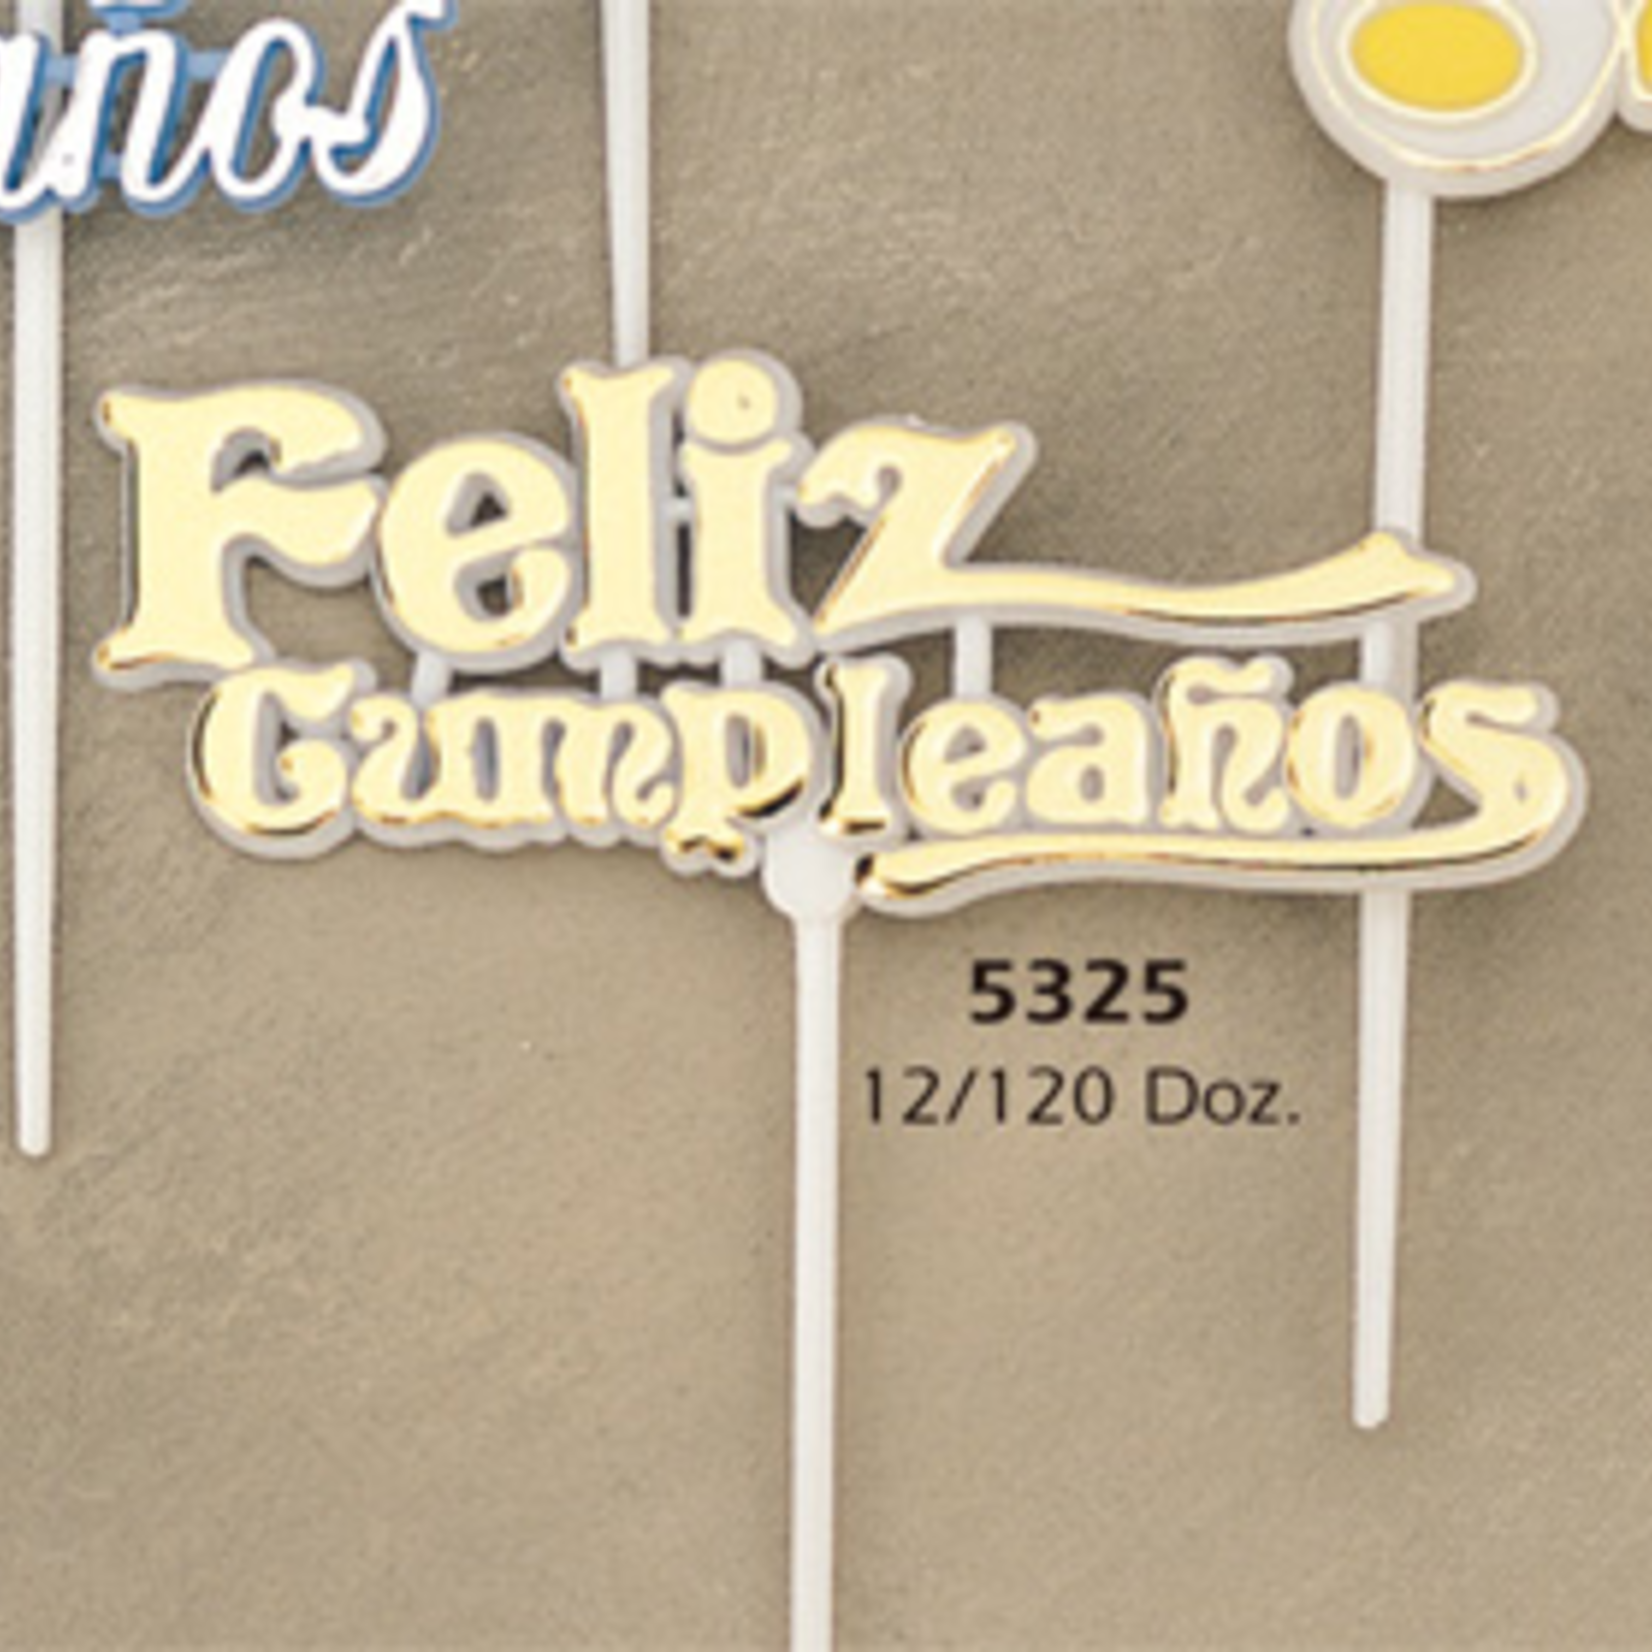 FELIZ CUMPLEANOS, GOLD/SILVER PICKS